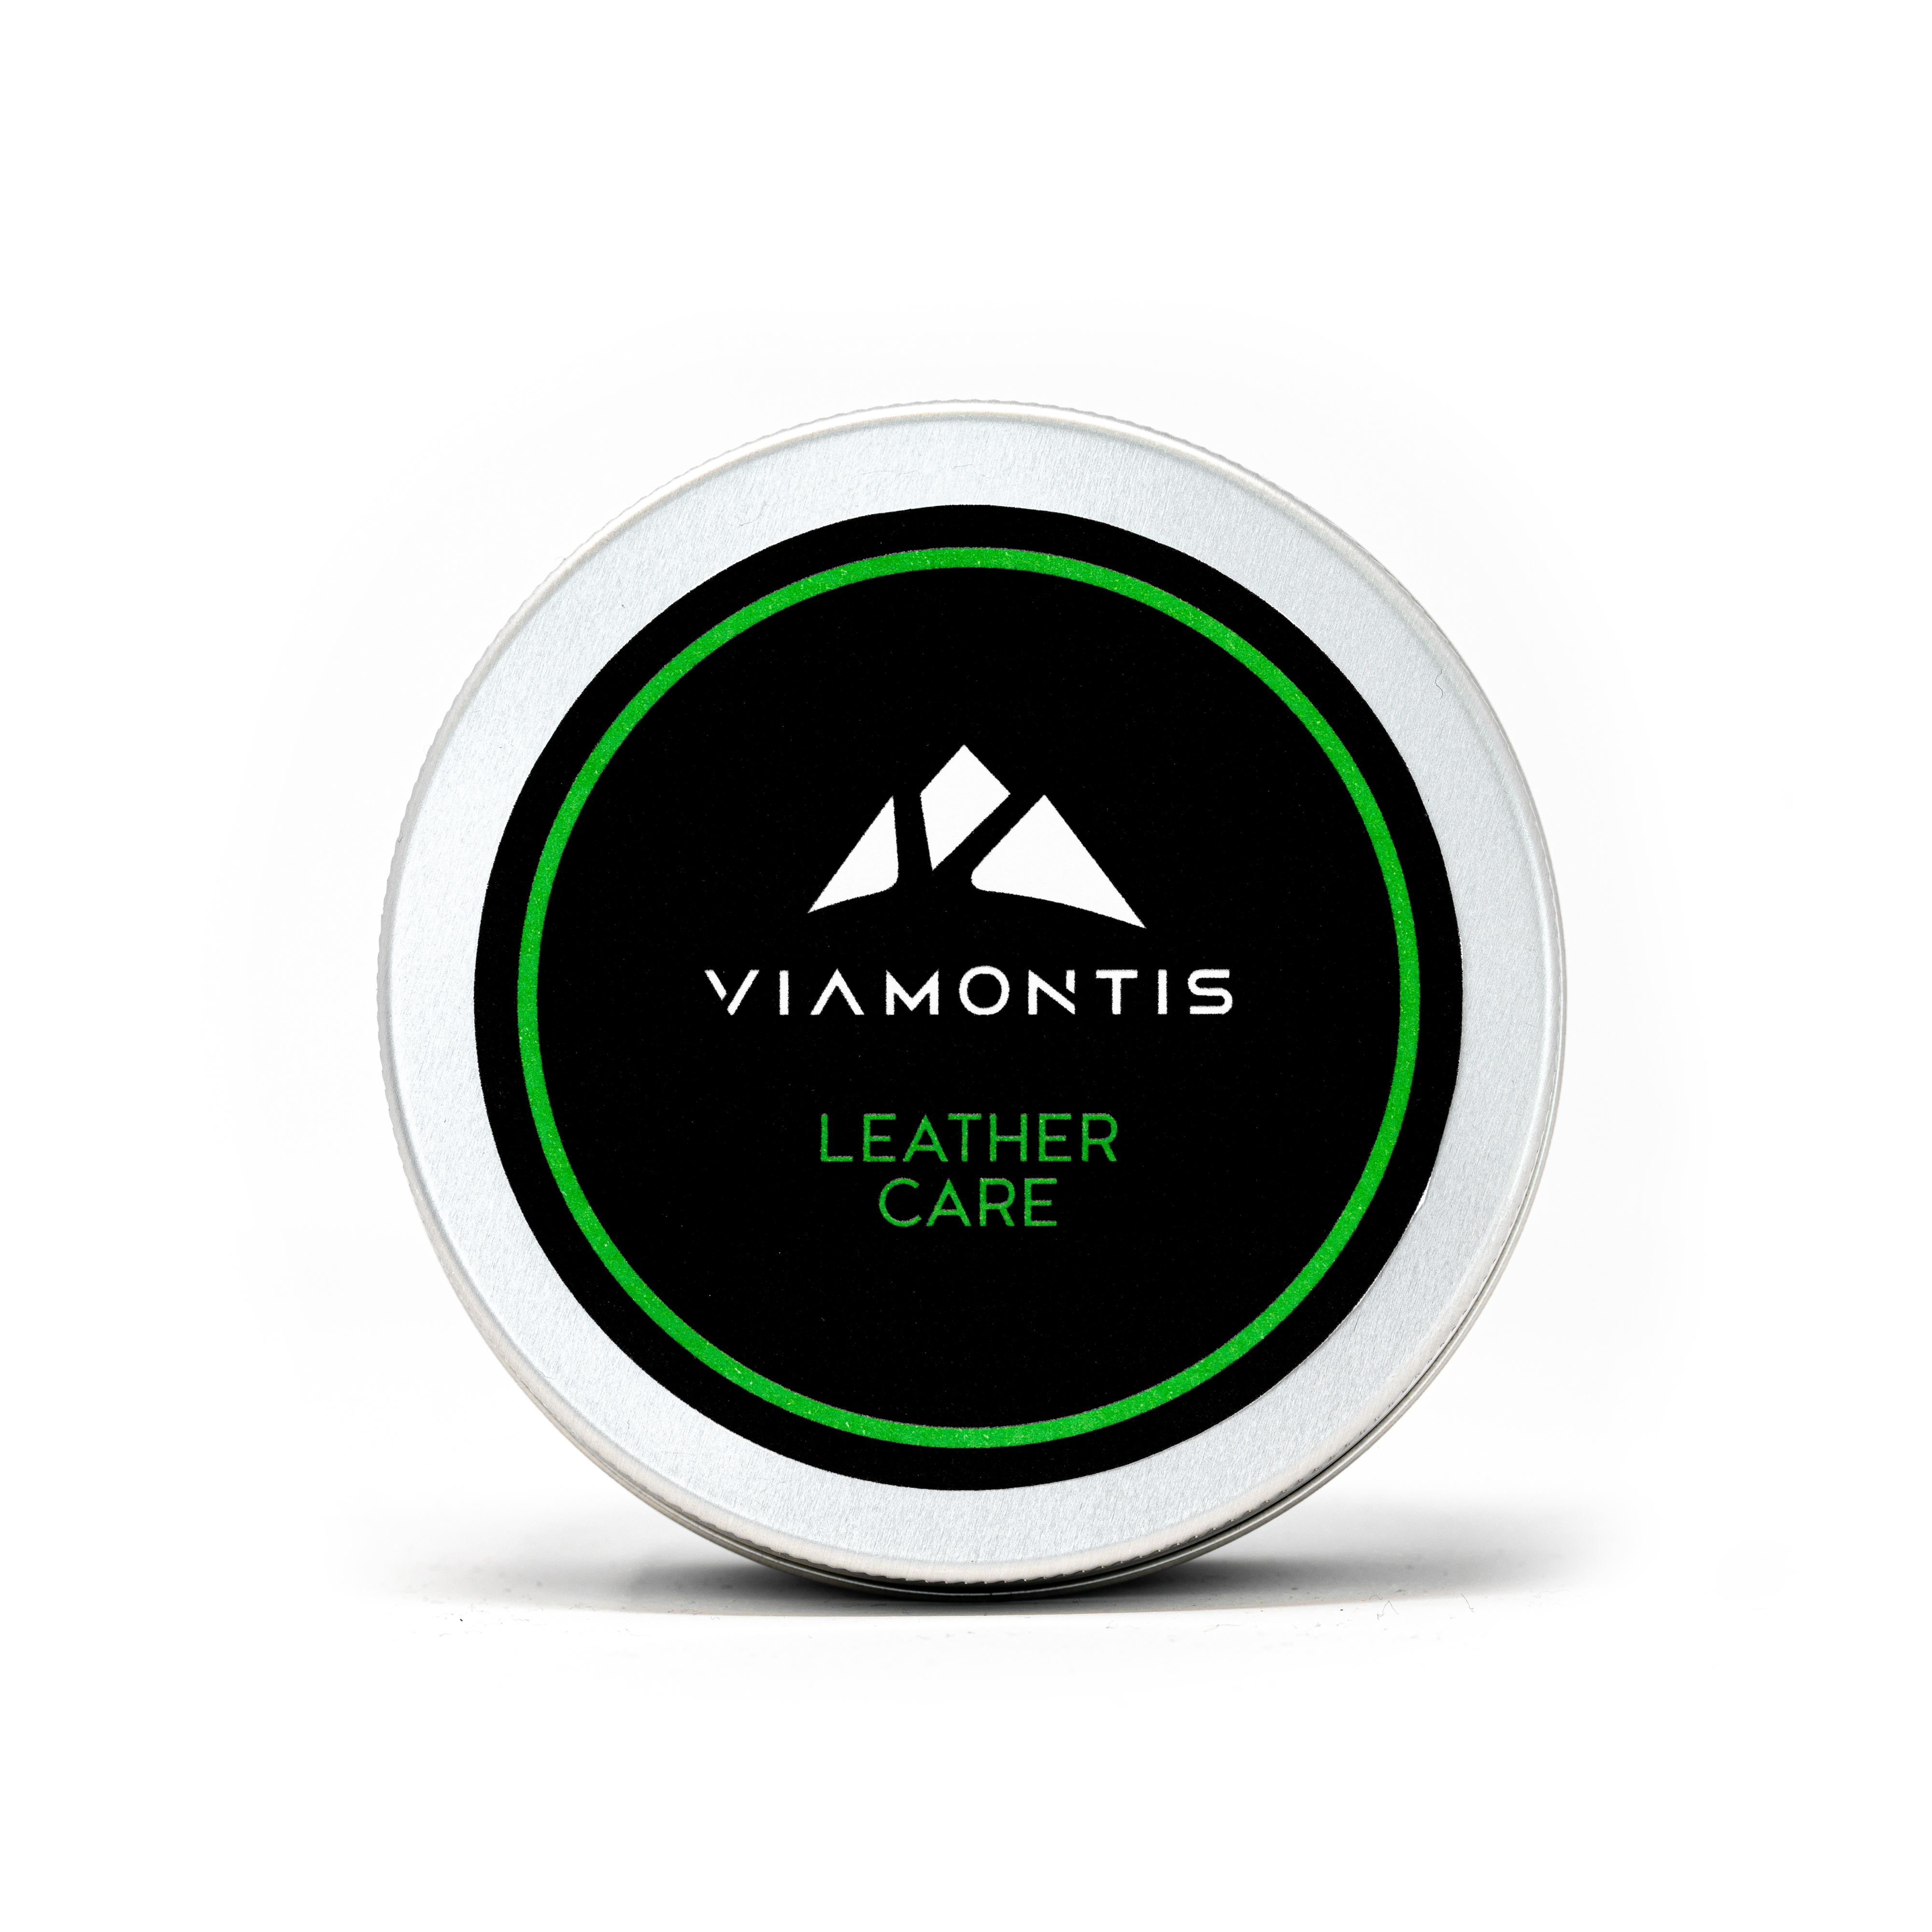 Balsam für die Autoseele: Viamontis Lederpflege, Viamontis GmbH